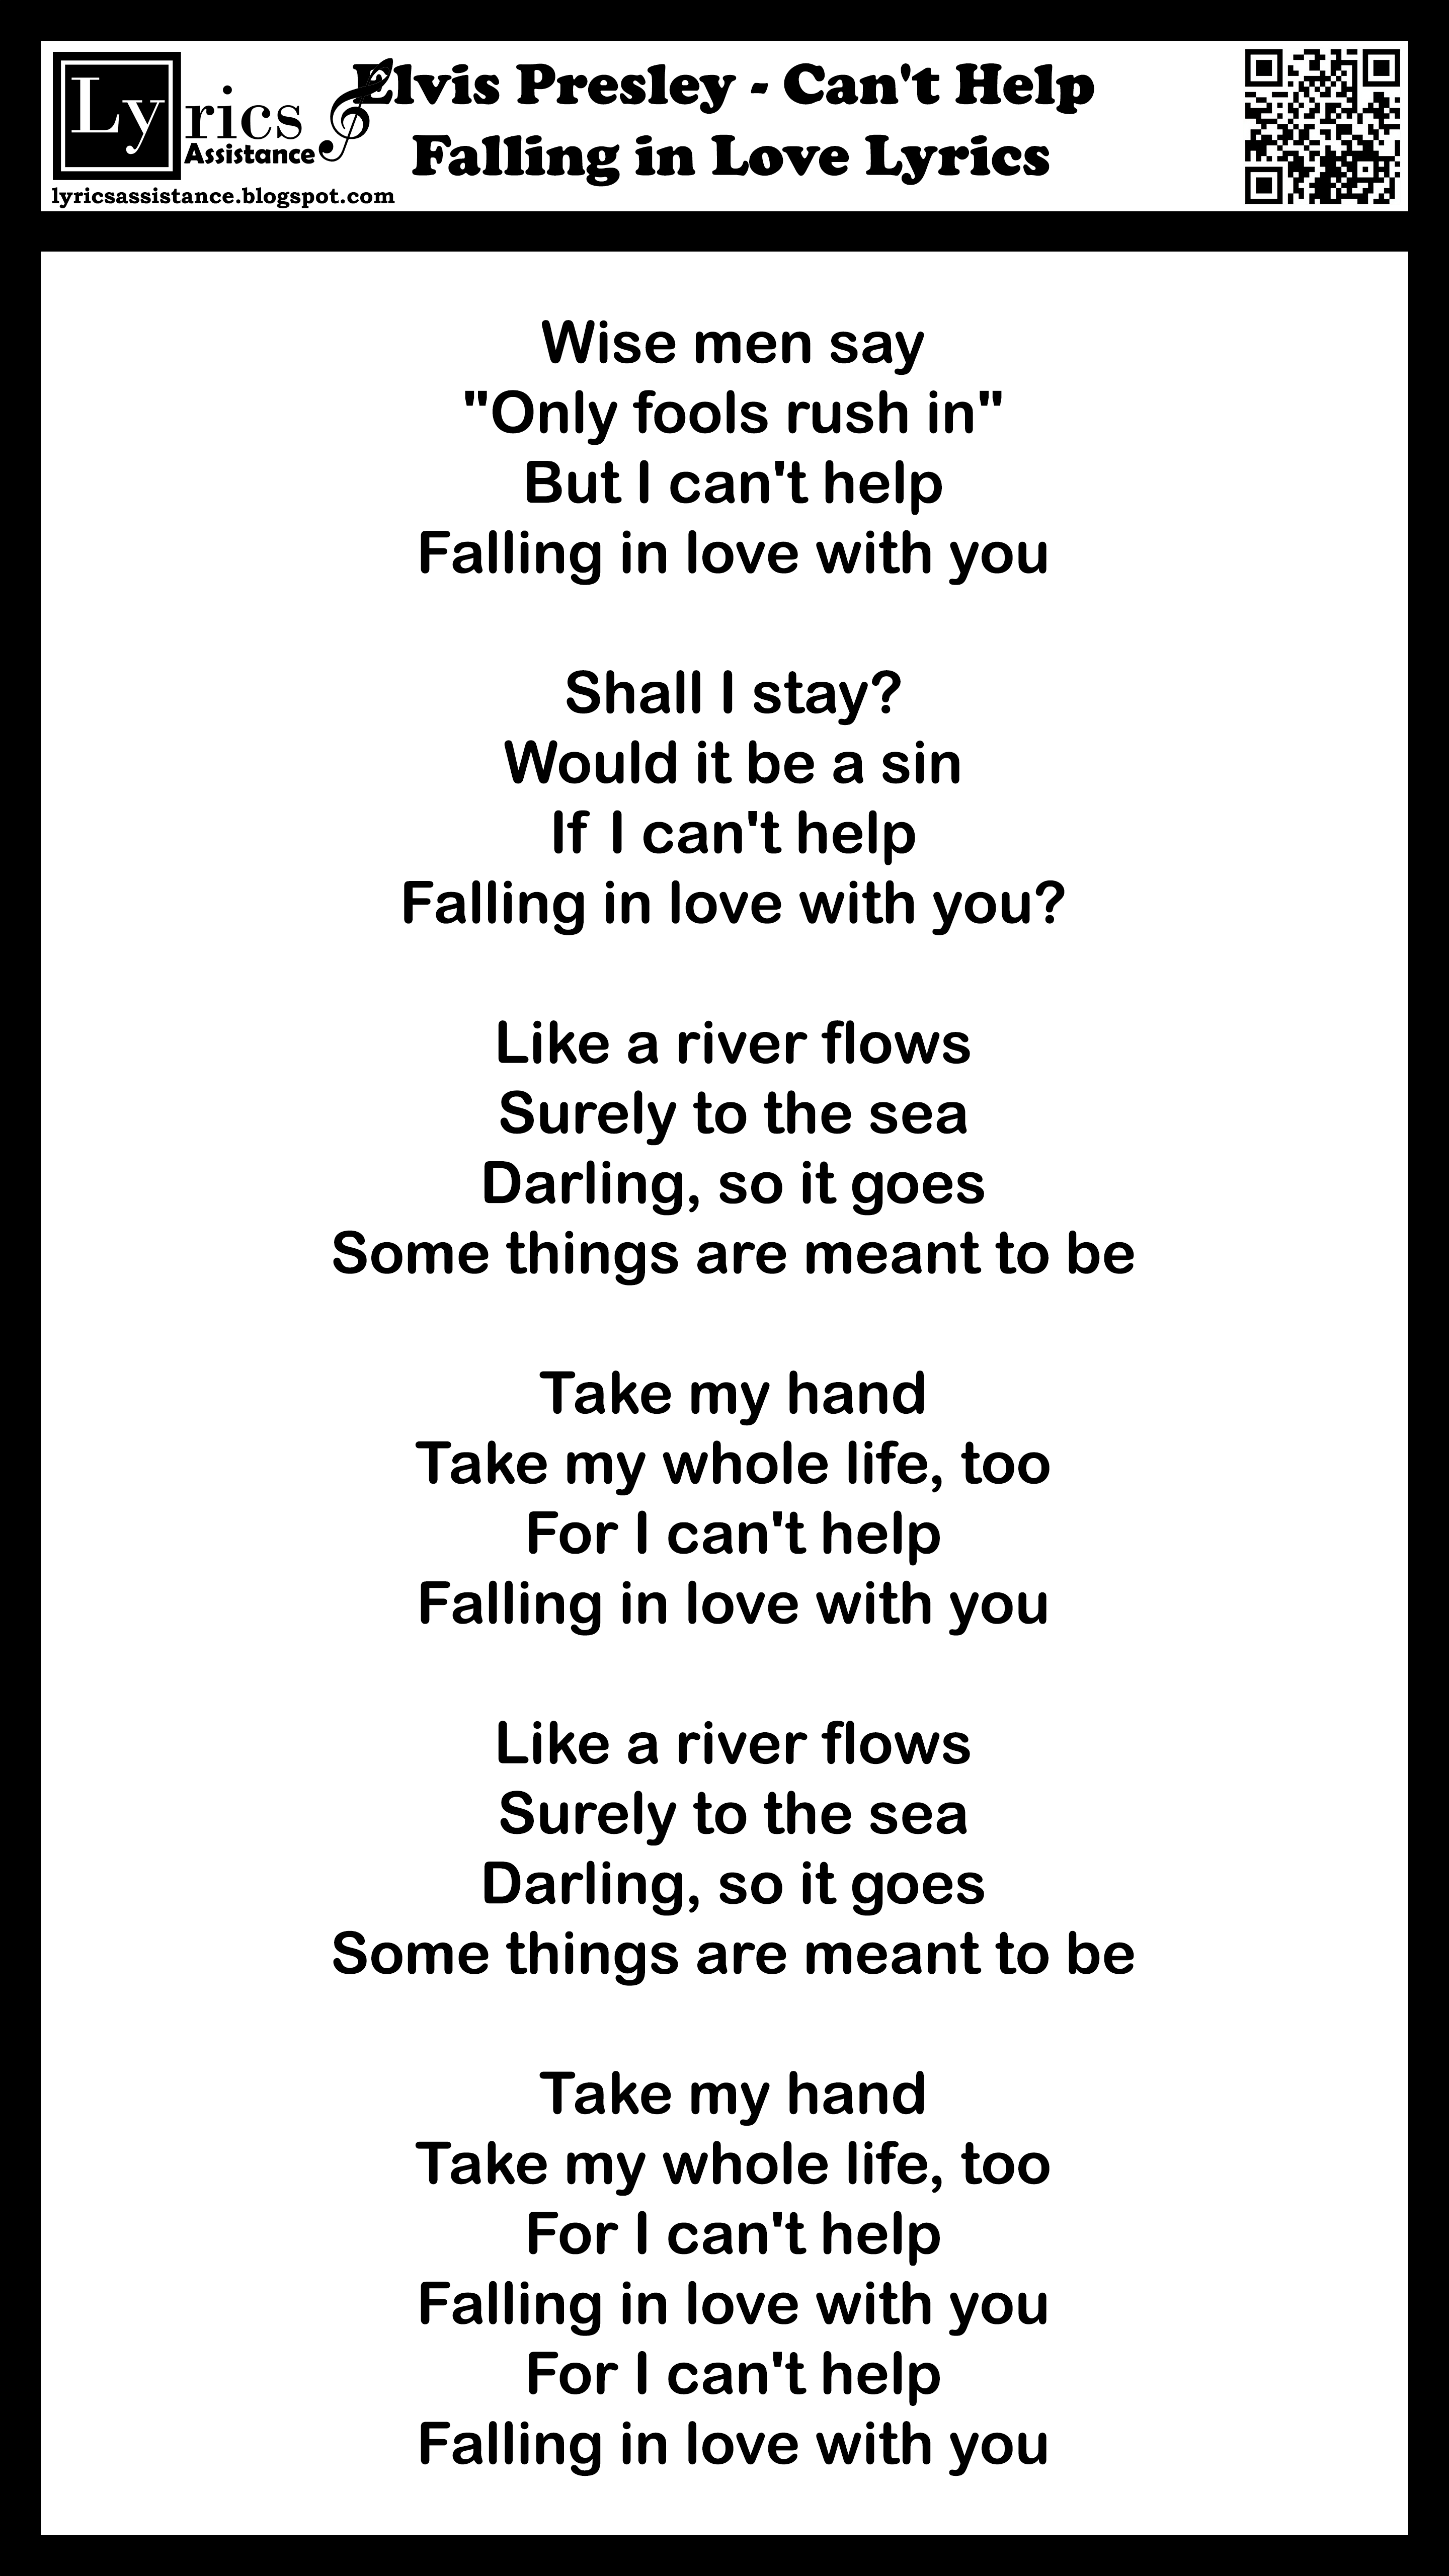 elvis presley - can't help falling in love lyrics